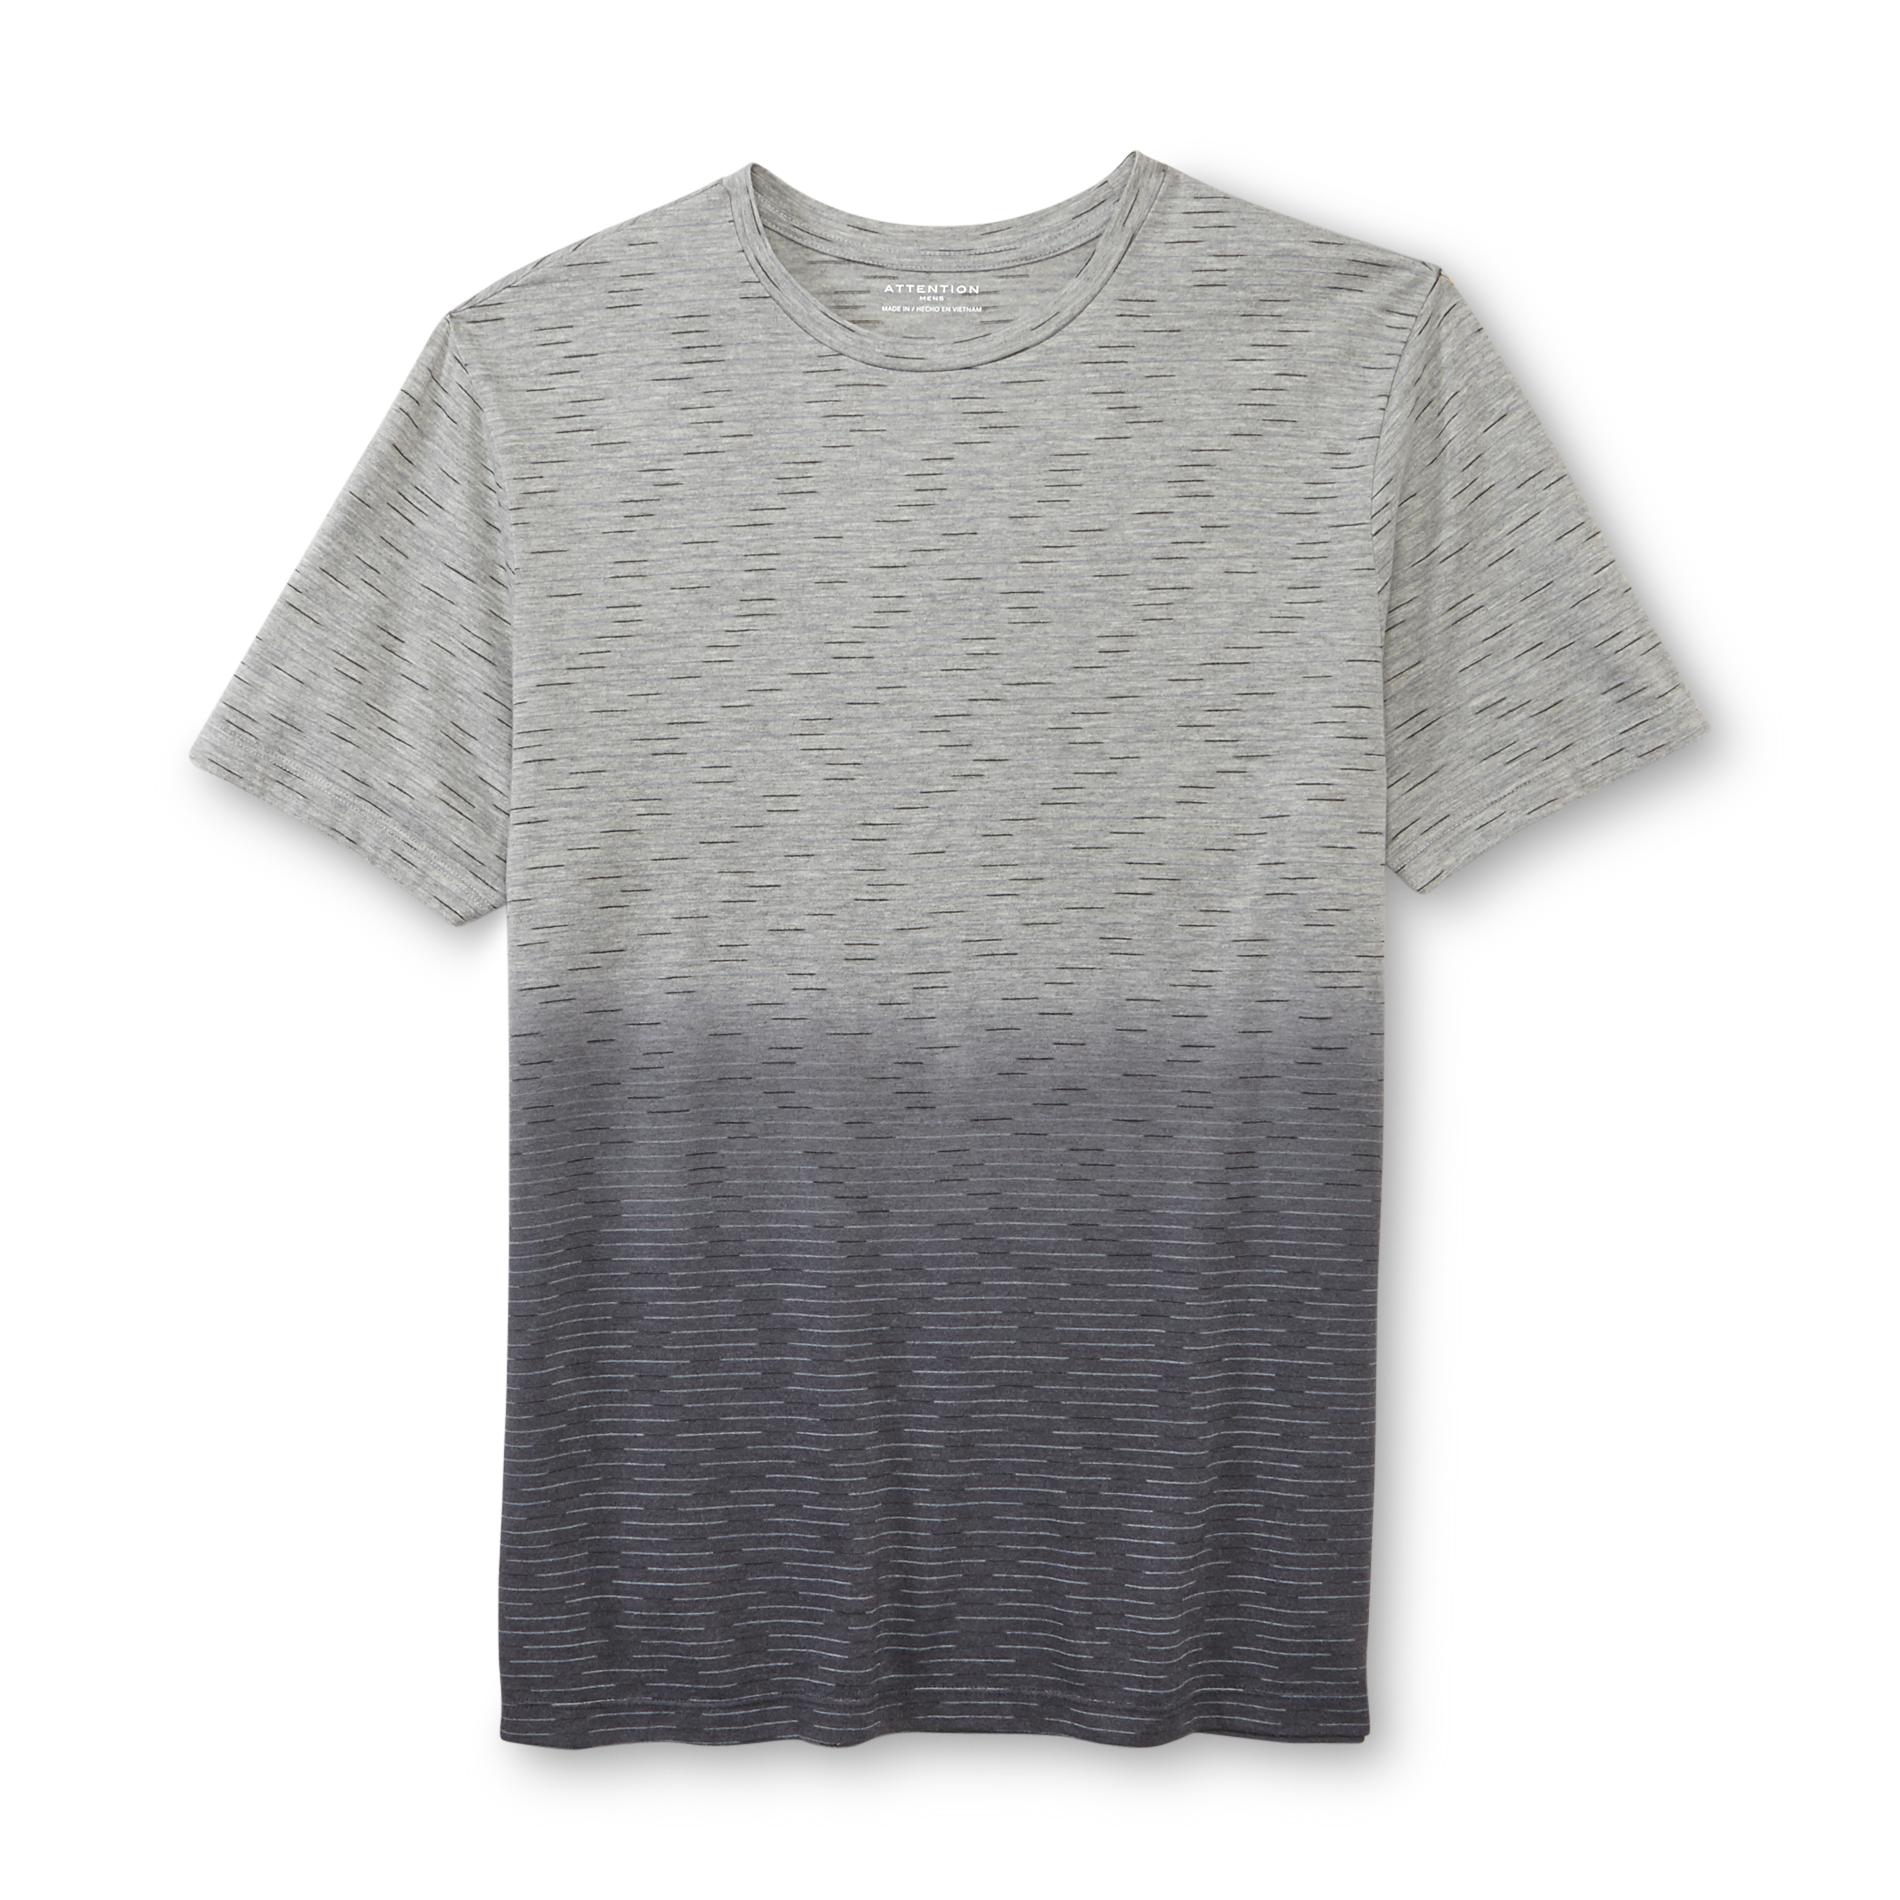 Attention Men's Ombre T-Shirt - Space Dye